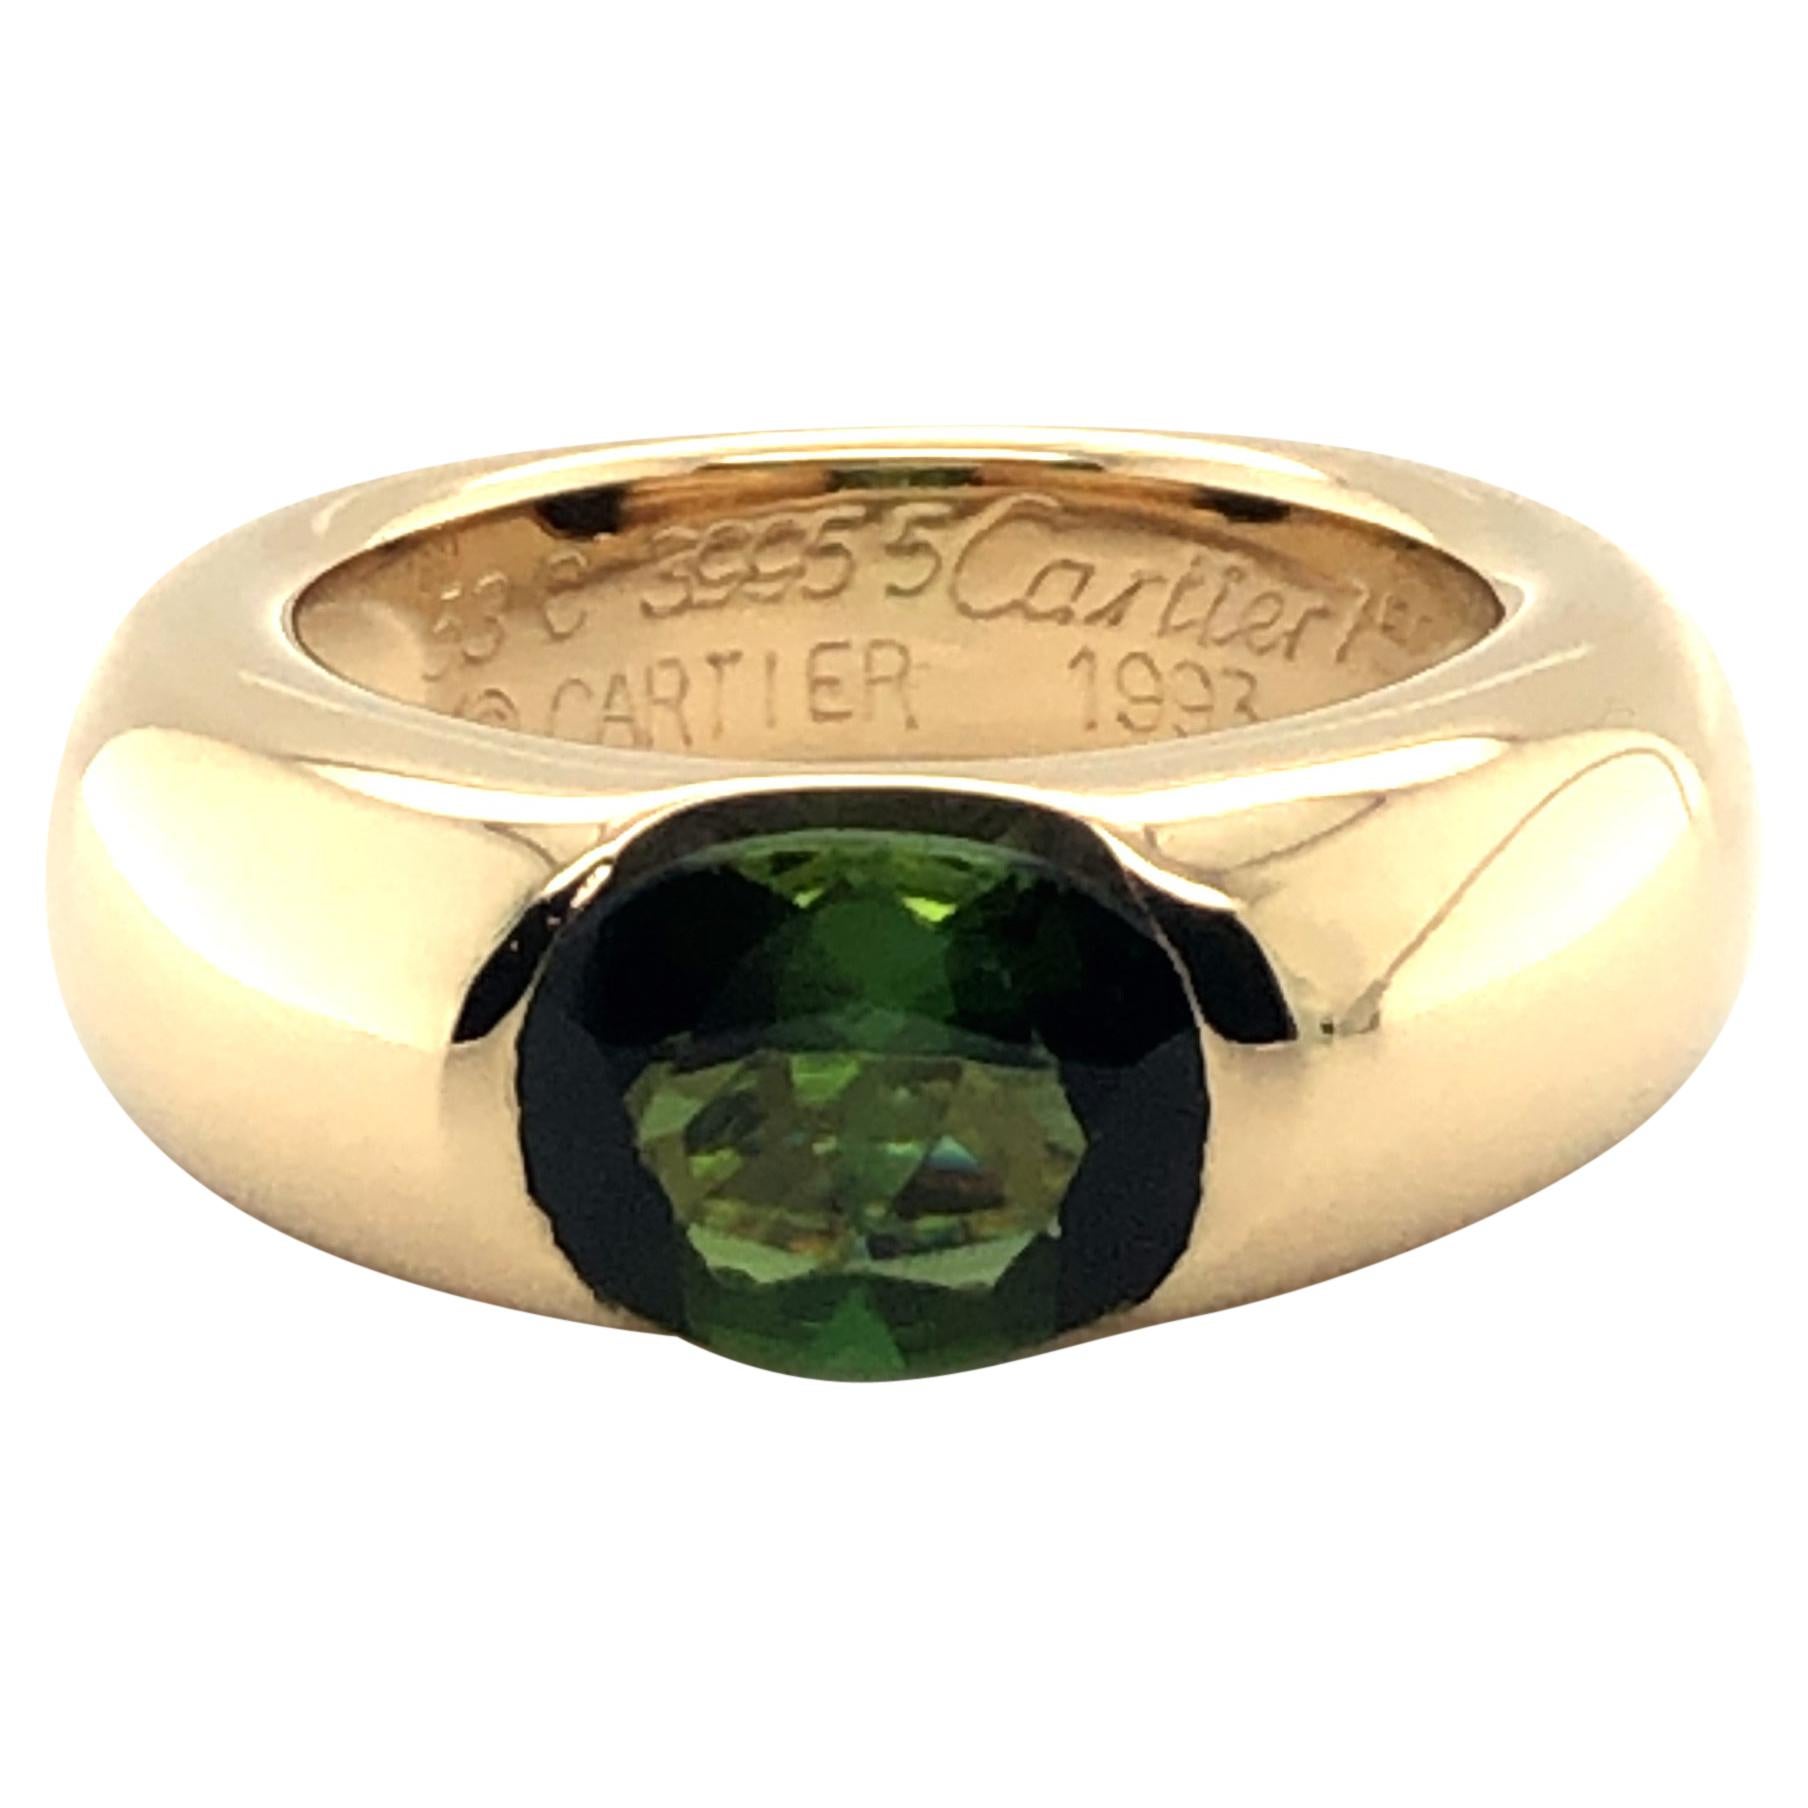 Cartier Green Tourmaline Ring in 18 Karat Yellow Gold